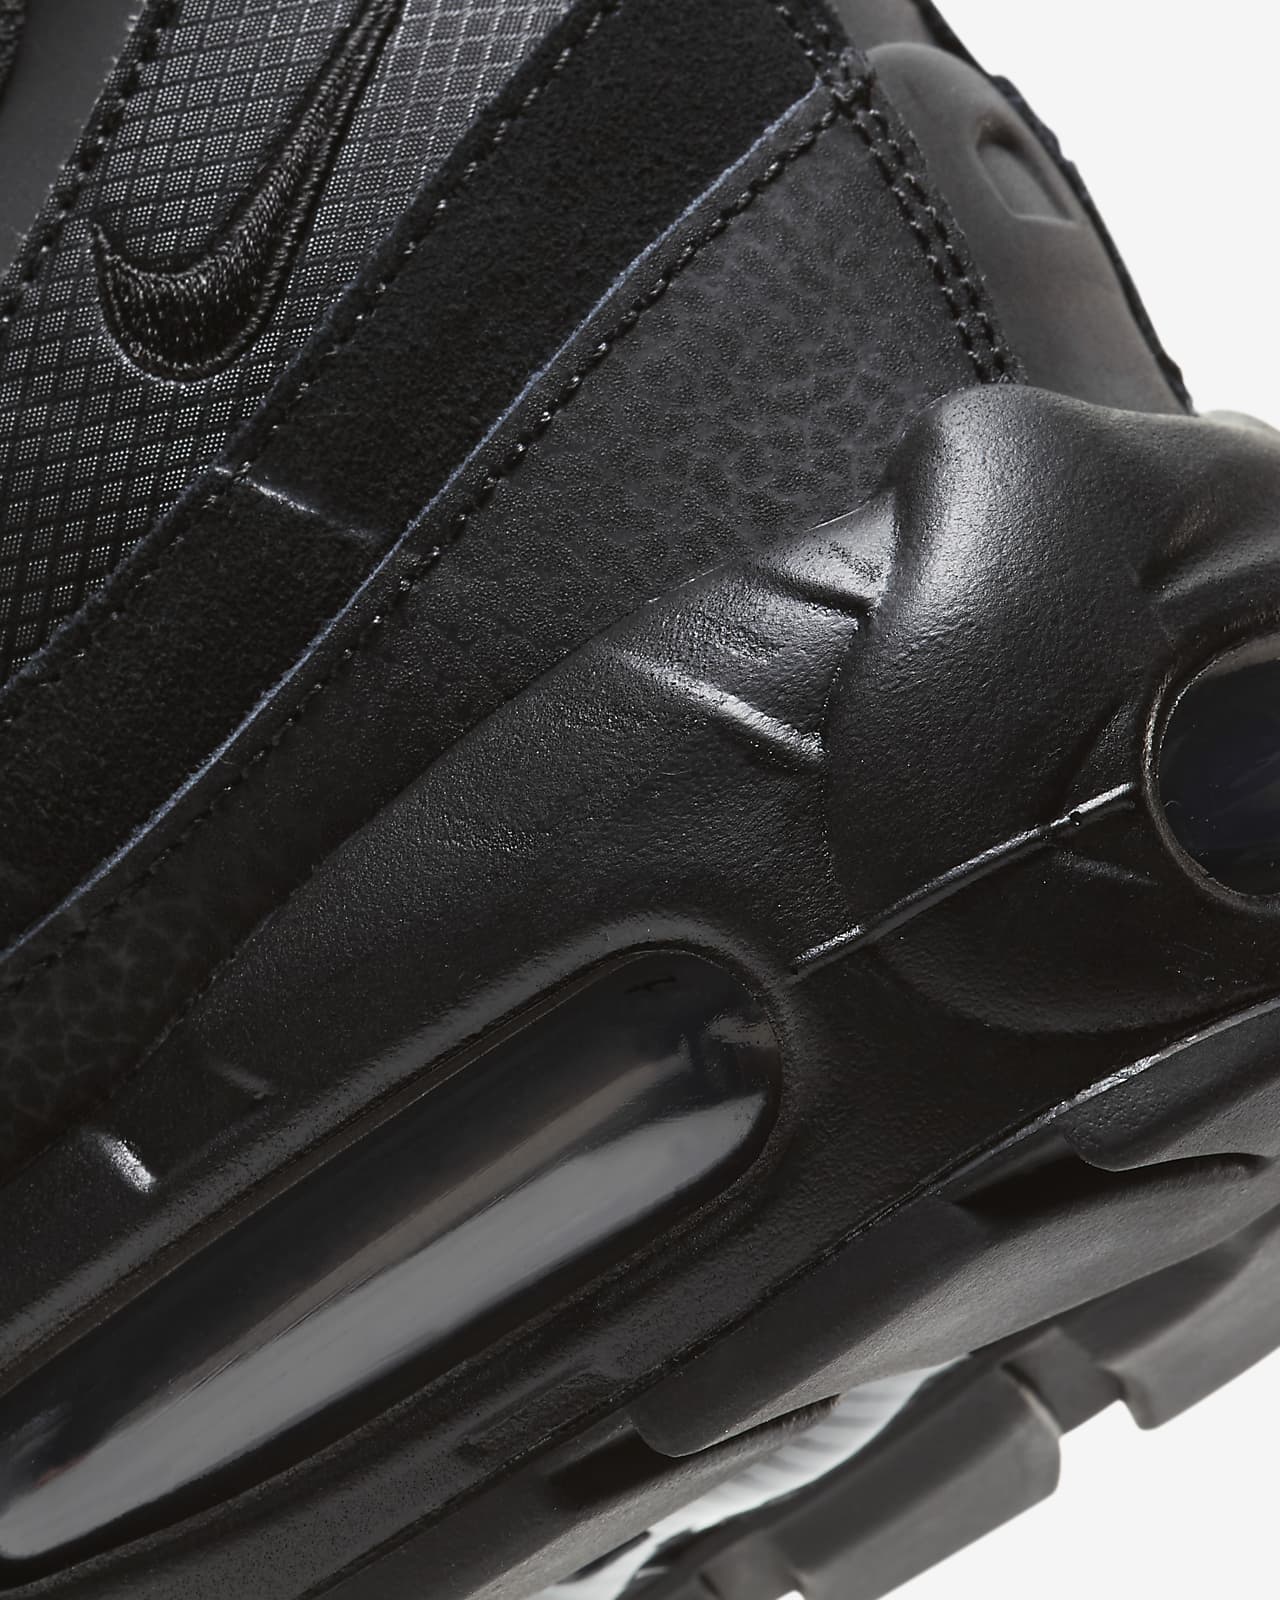 Nike Air Max 95 Essential Men's Shoe